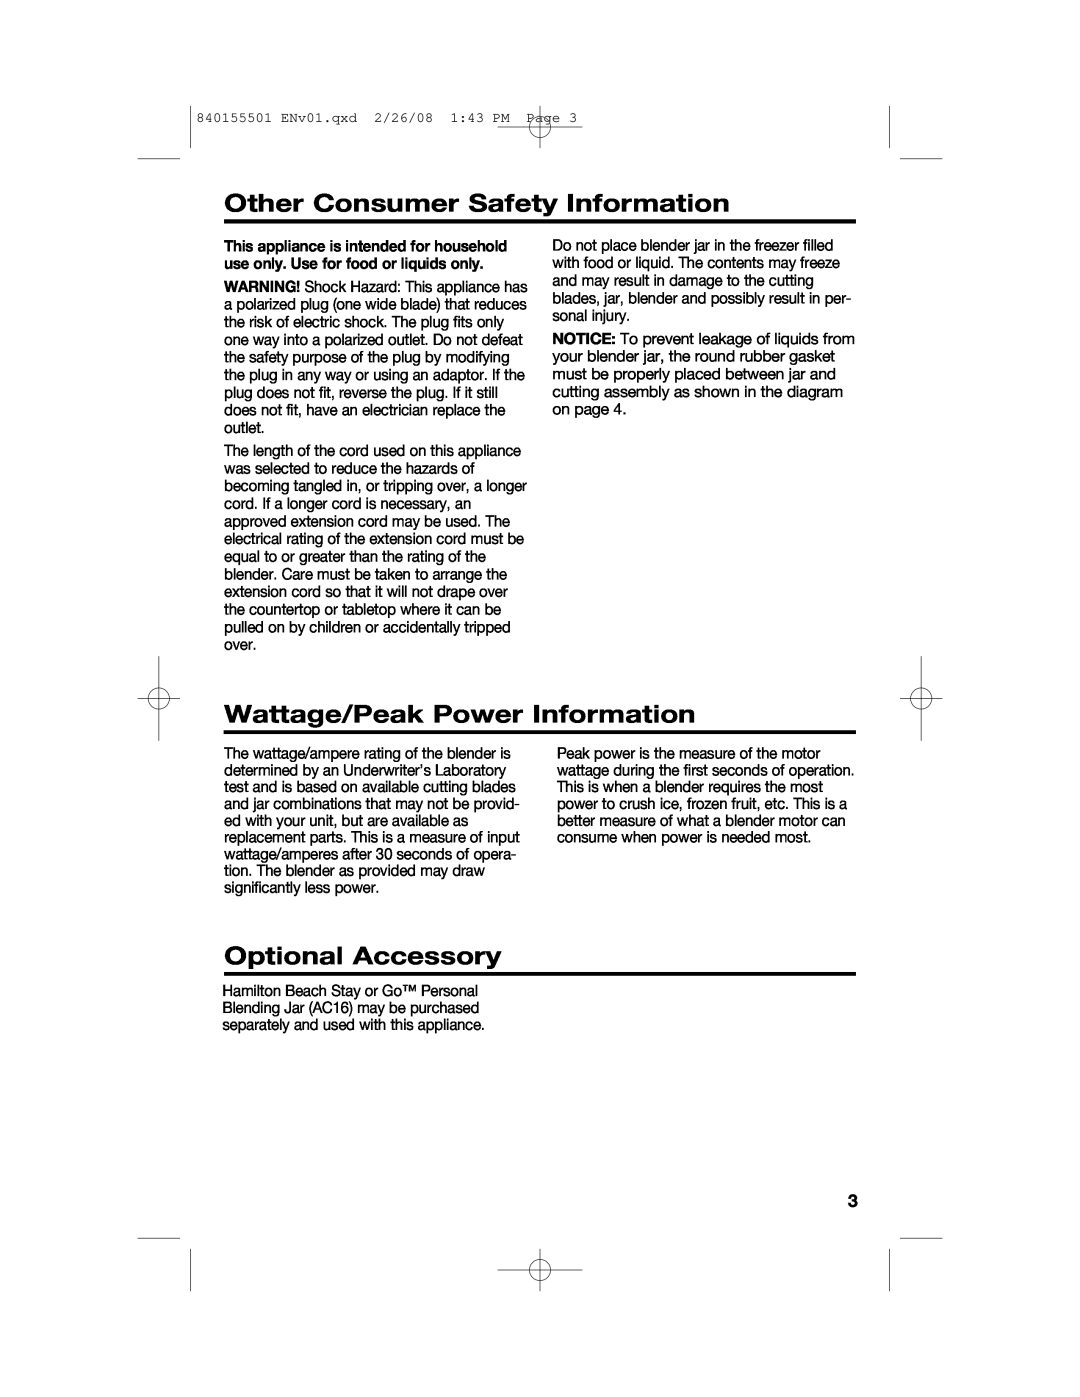 Hamilton Beach 54616C manual Other Consumer Safety Information, Wattage/Peak Power Information, Optional Accessory 